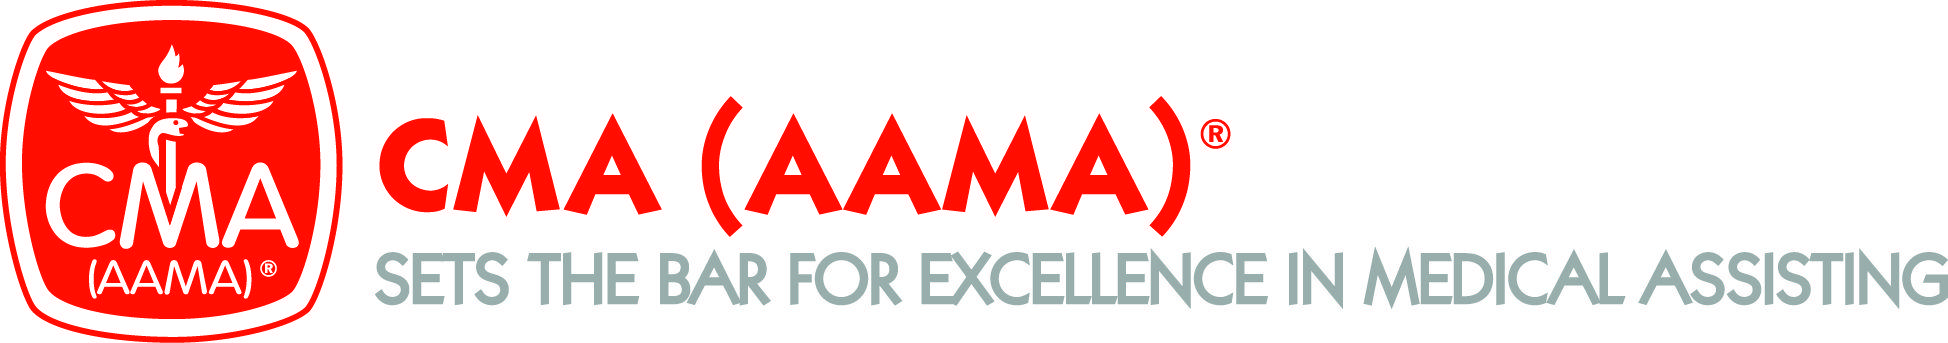 Medical Assistant Logo - AAMA Official Site Association of Medical Assistants